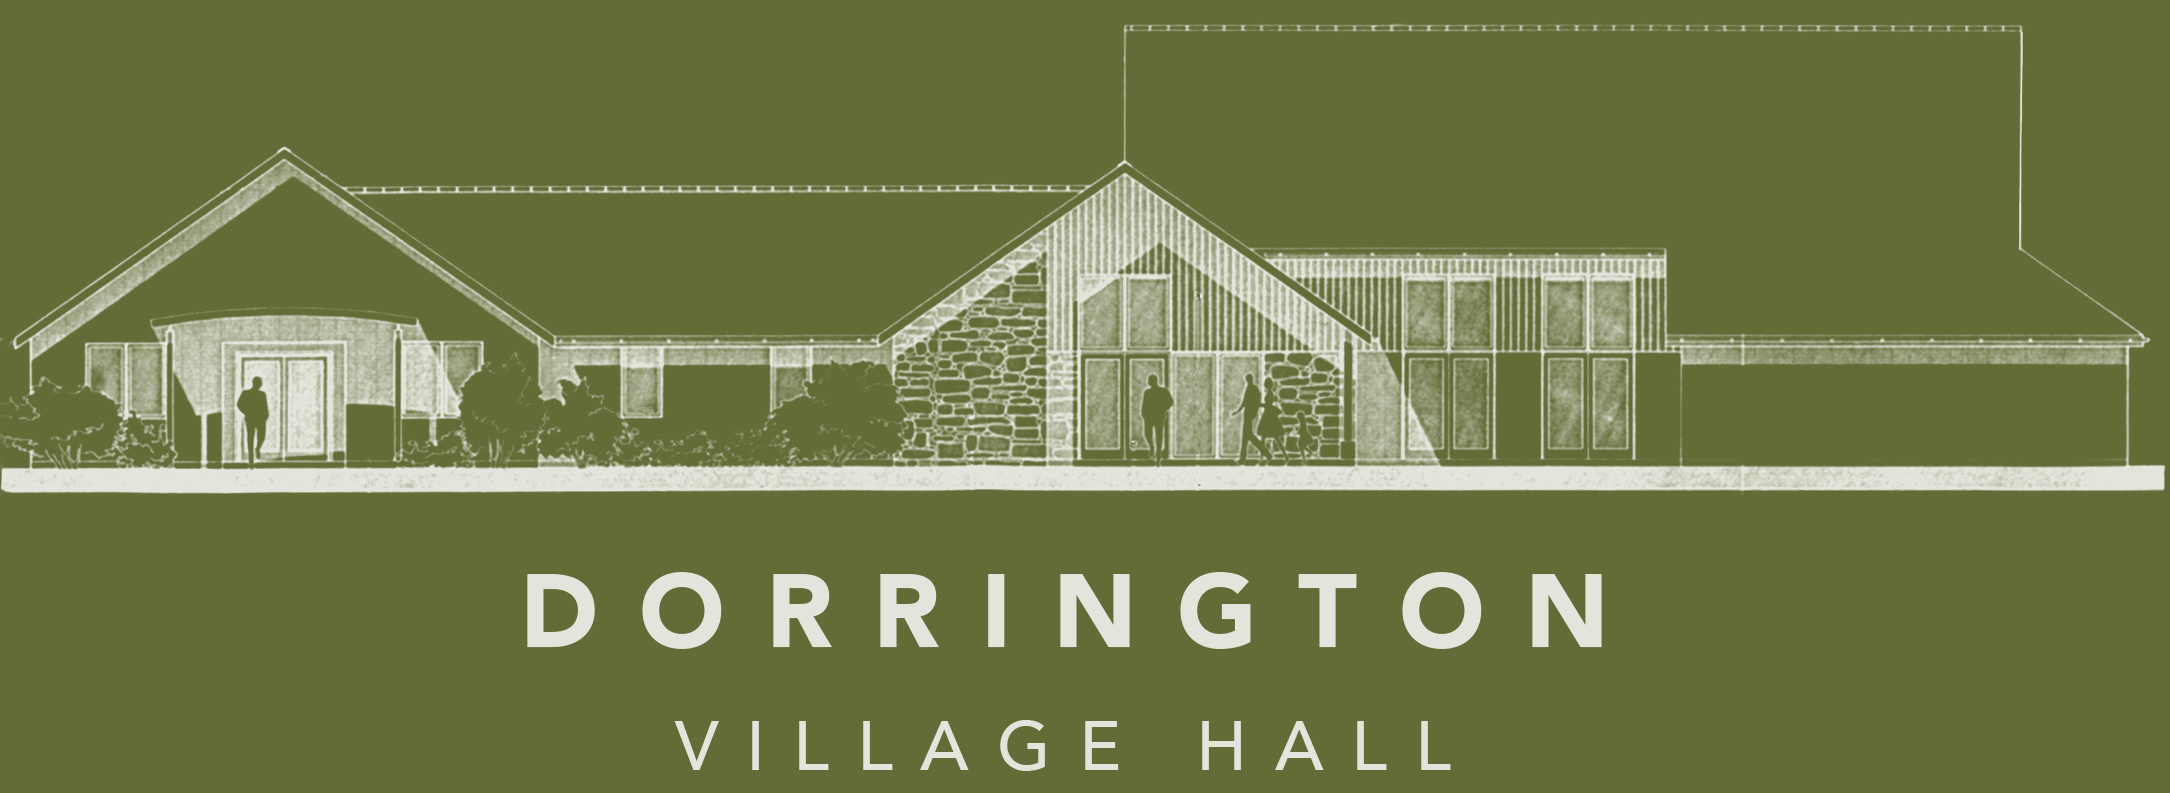 Dorrington Village Hall logo